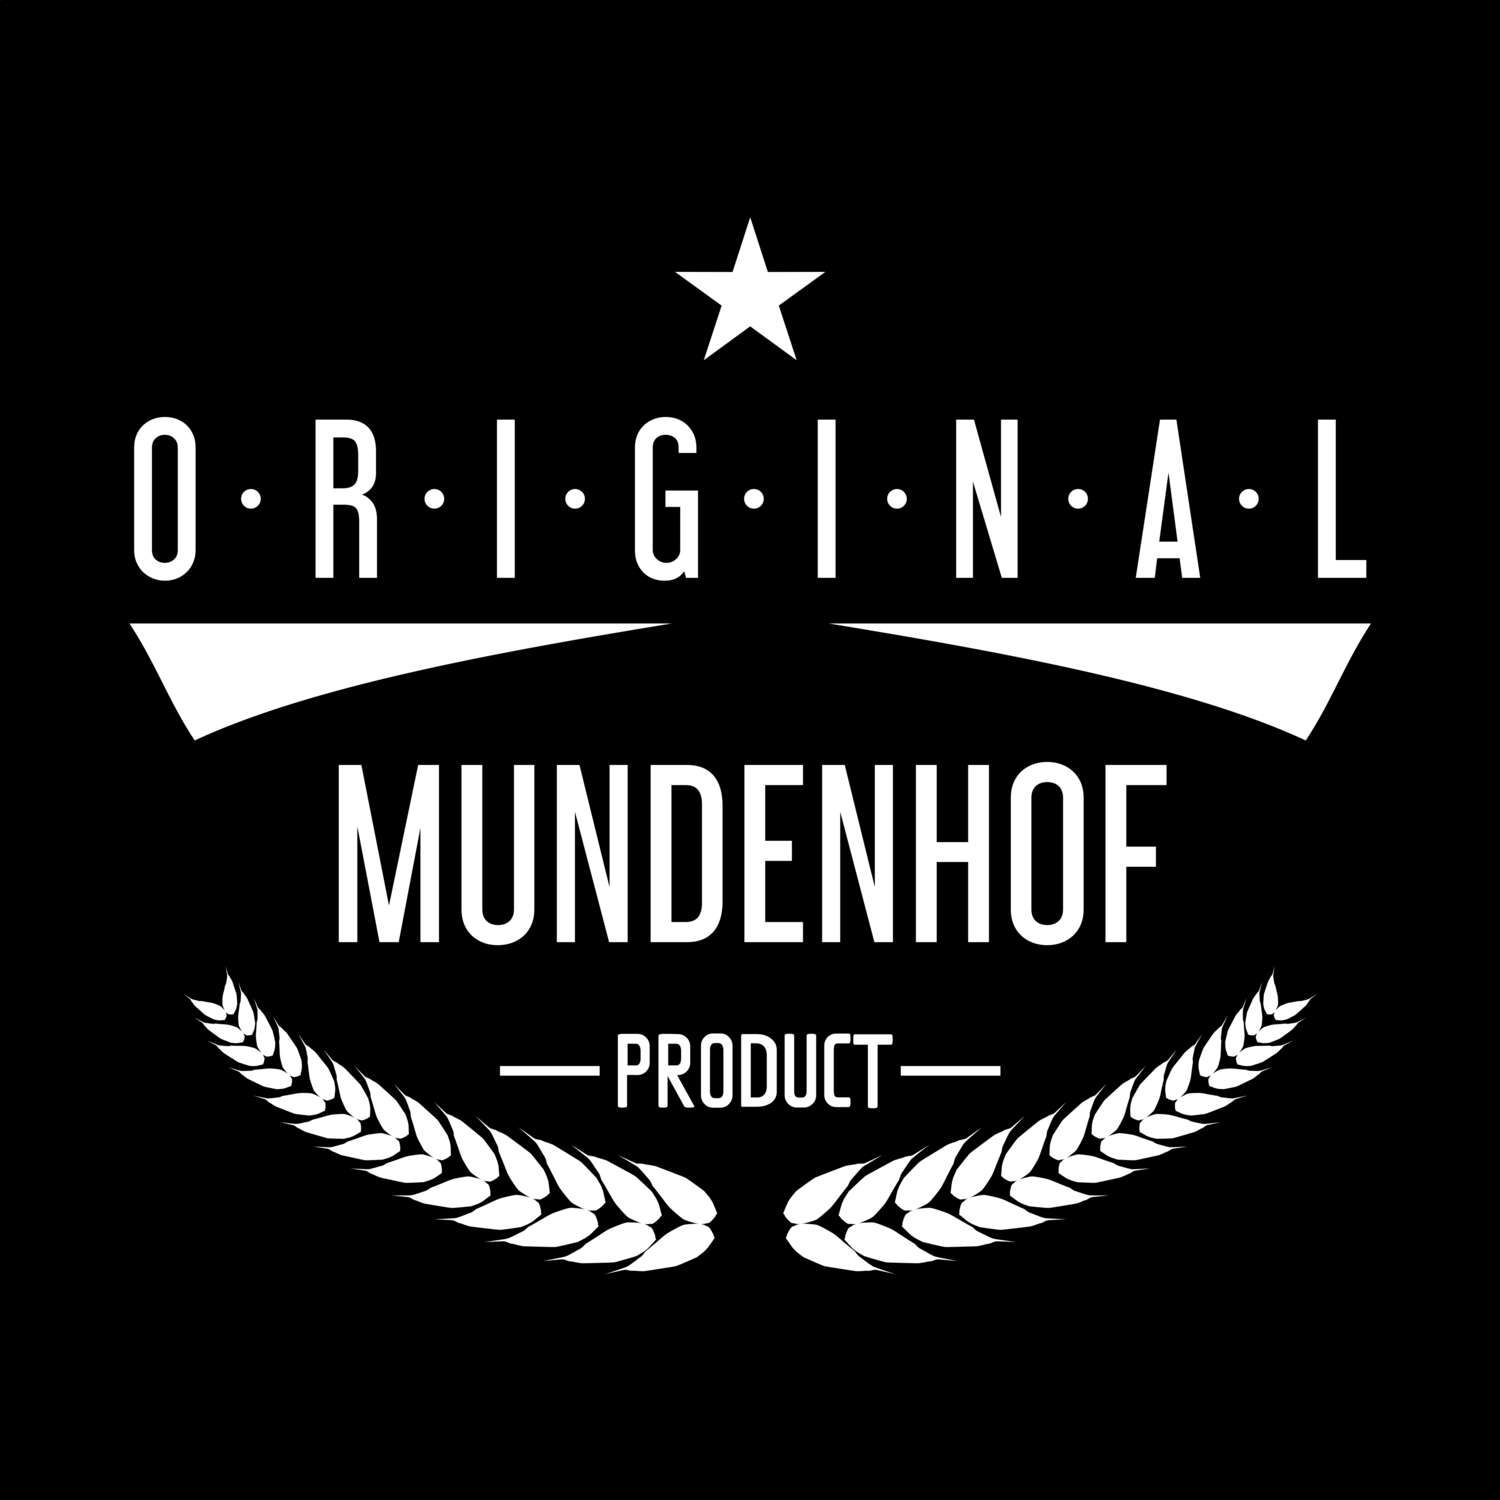 Mundenhof T-Shirt »Original Product«